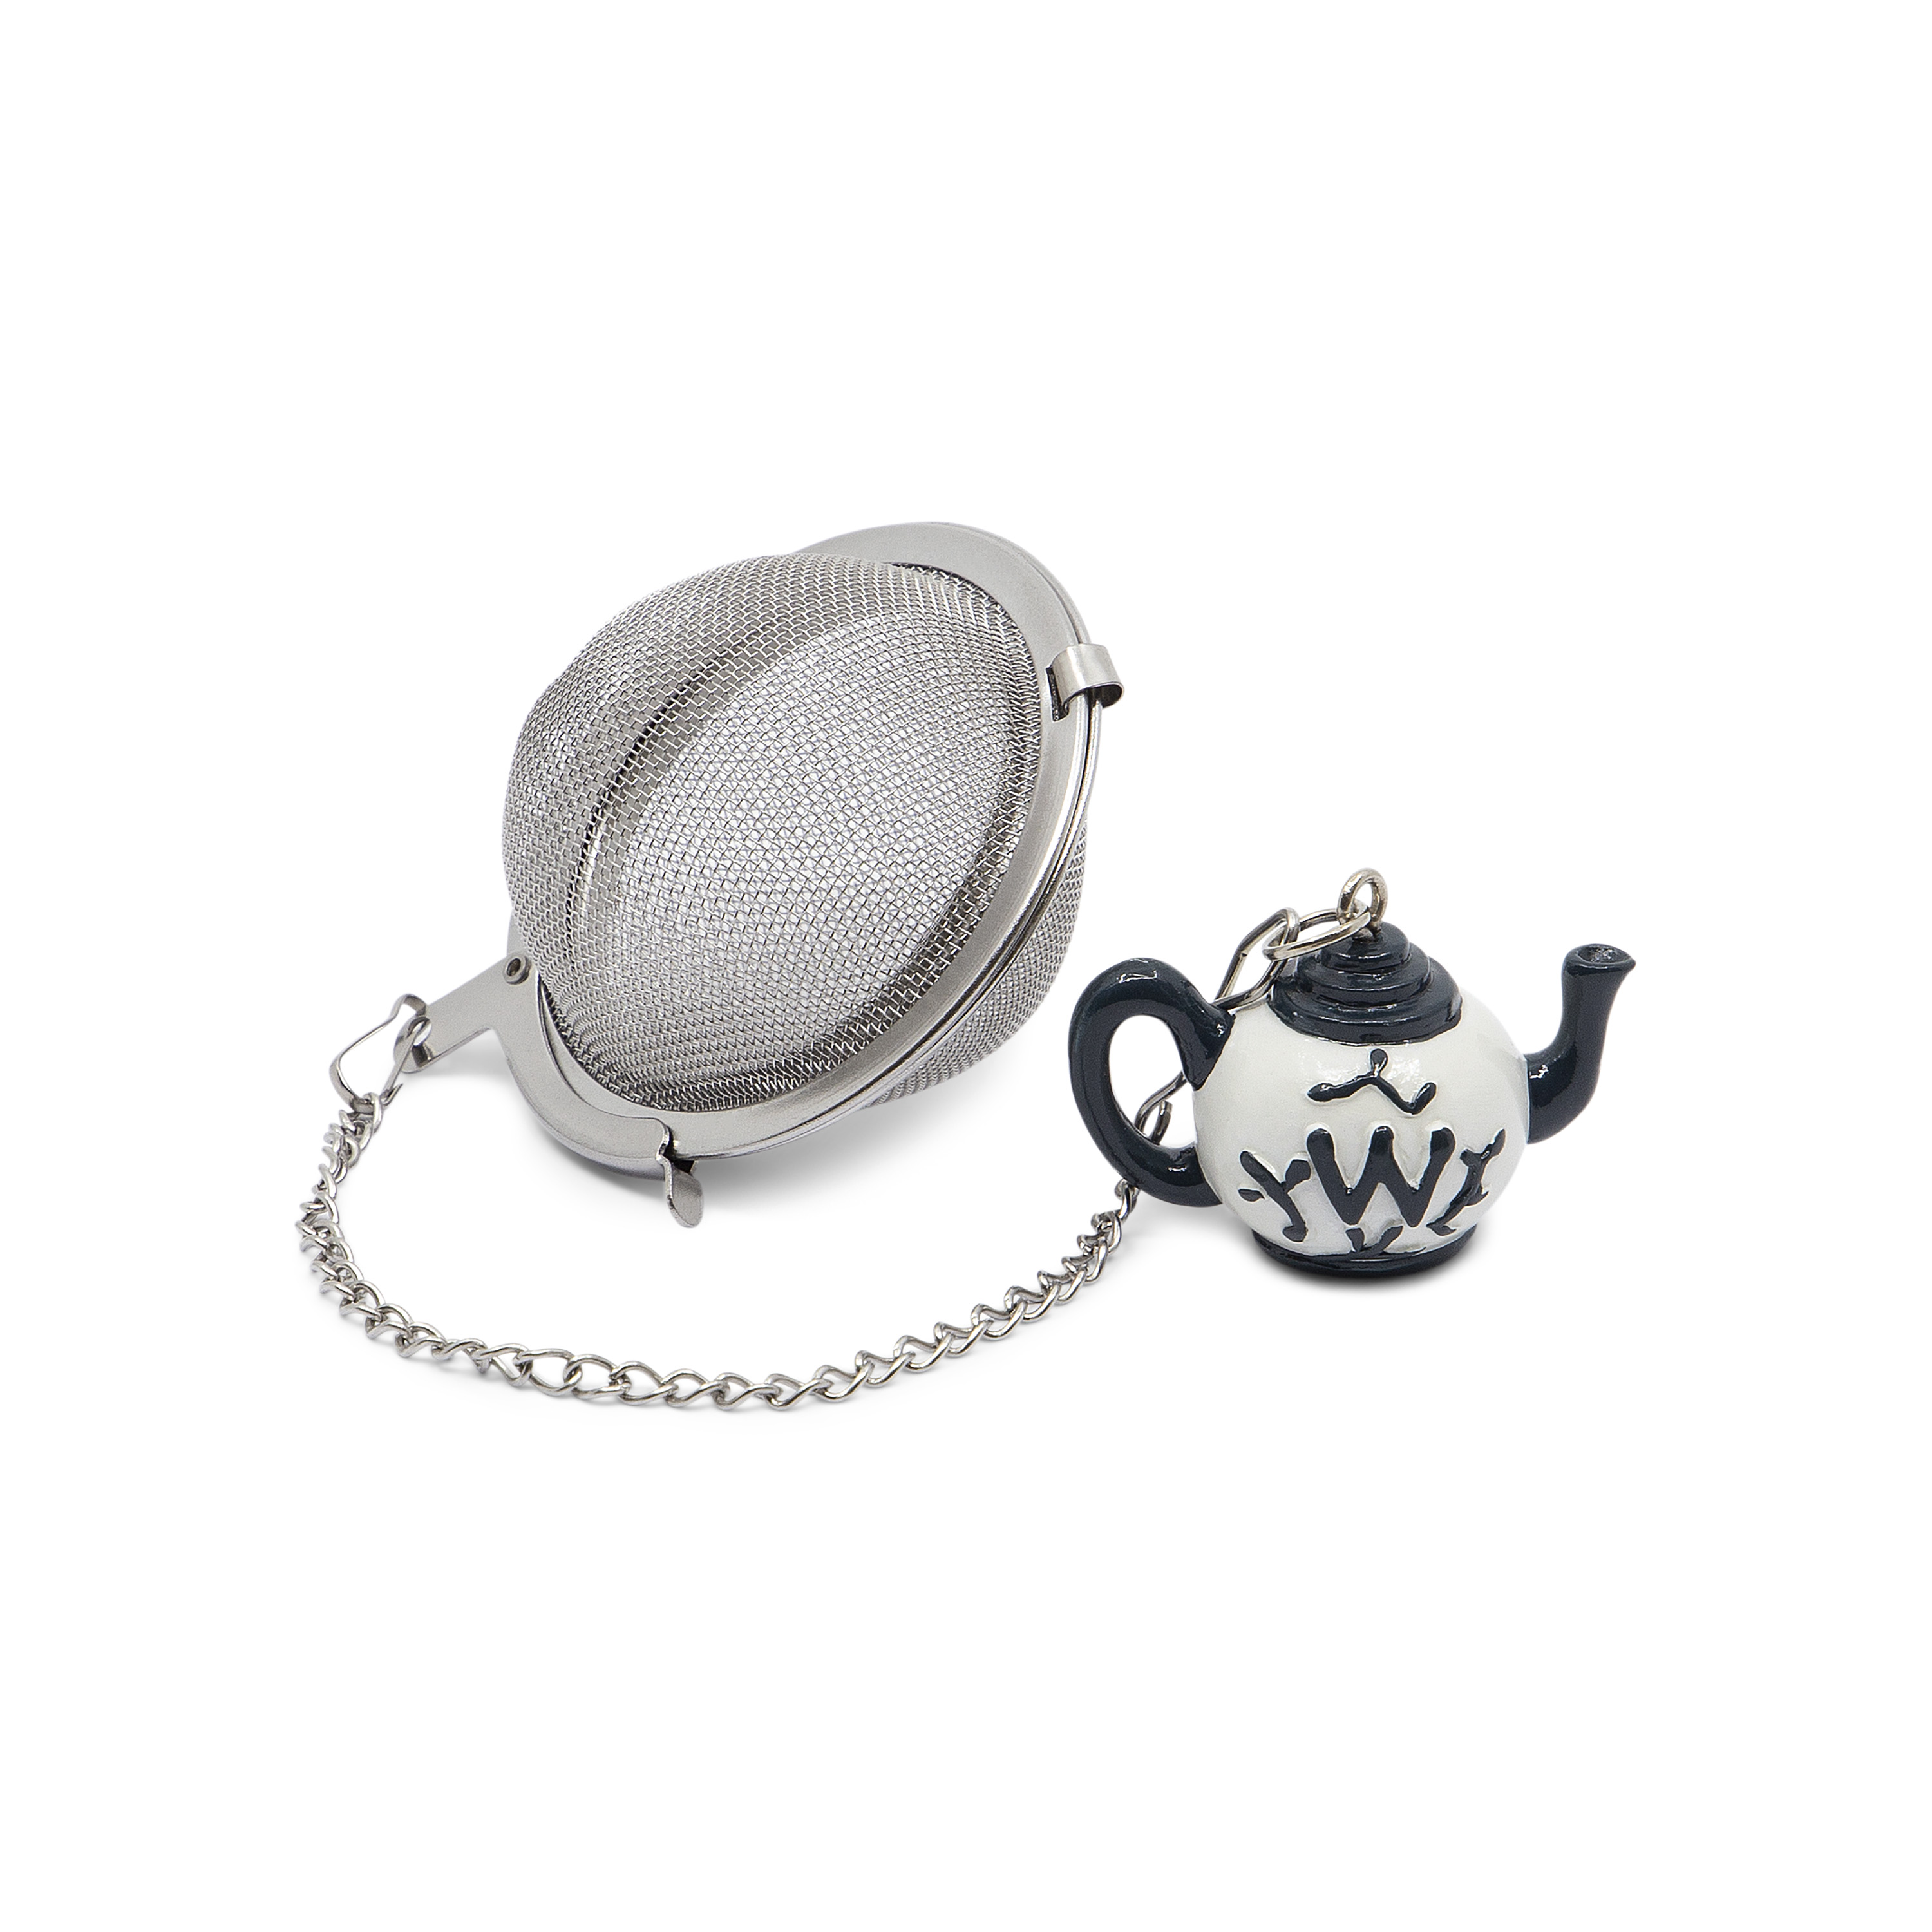 Teatime Infuser, Tea Equipment